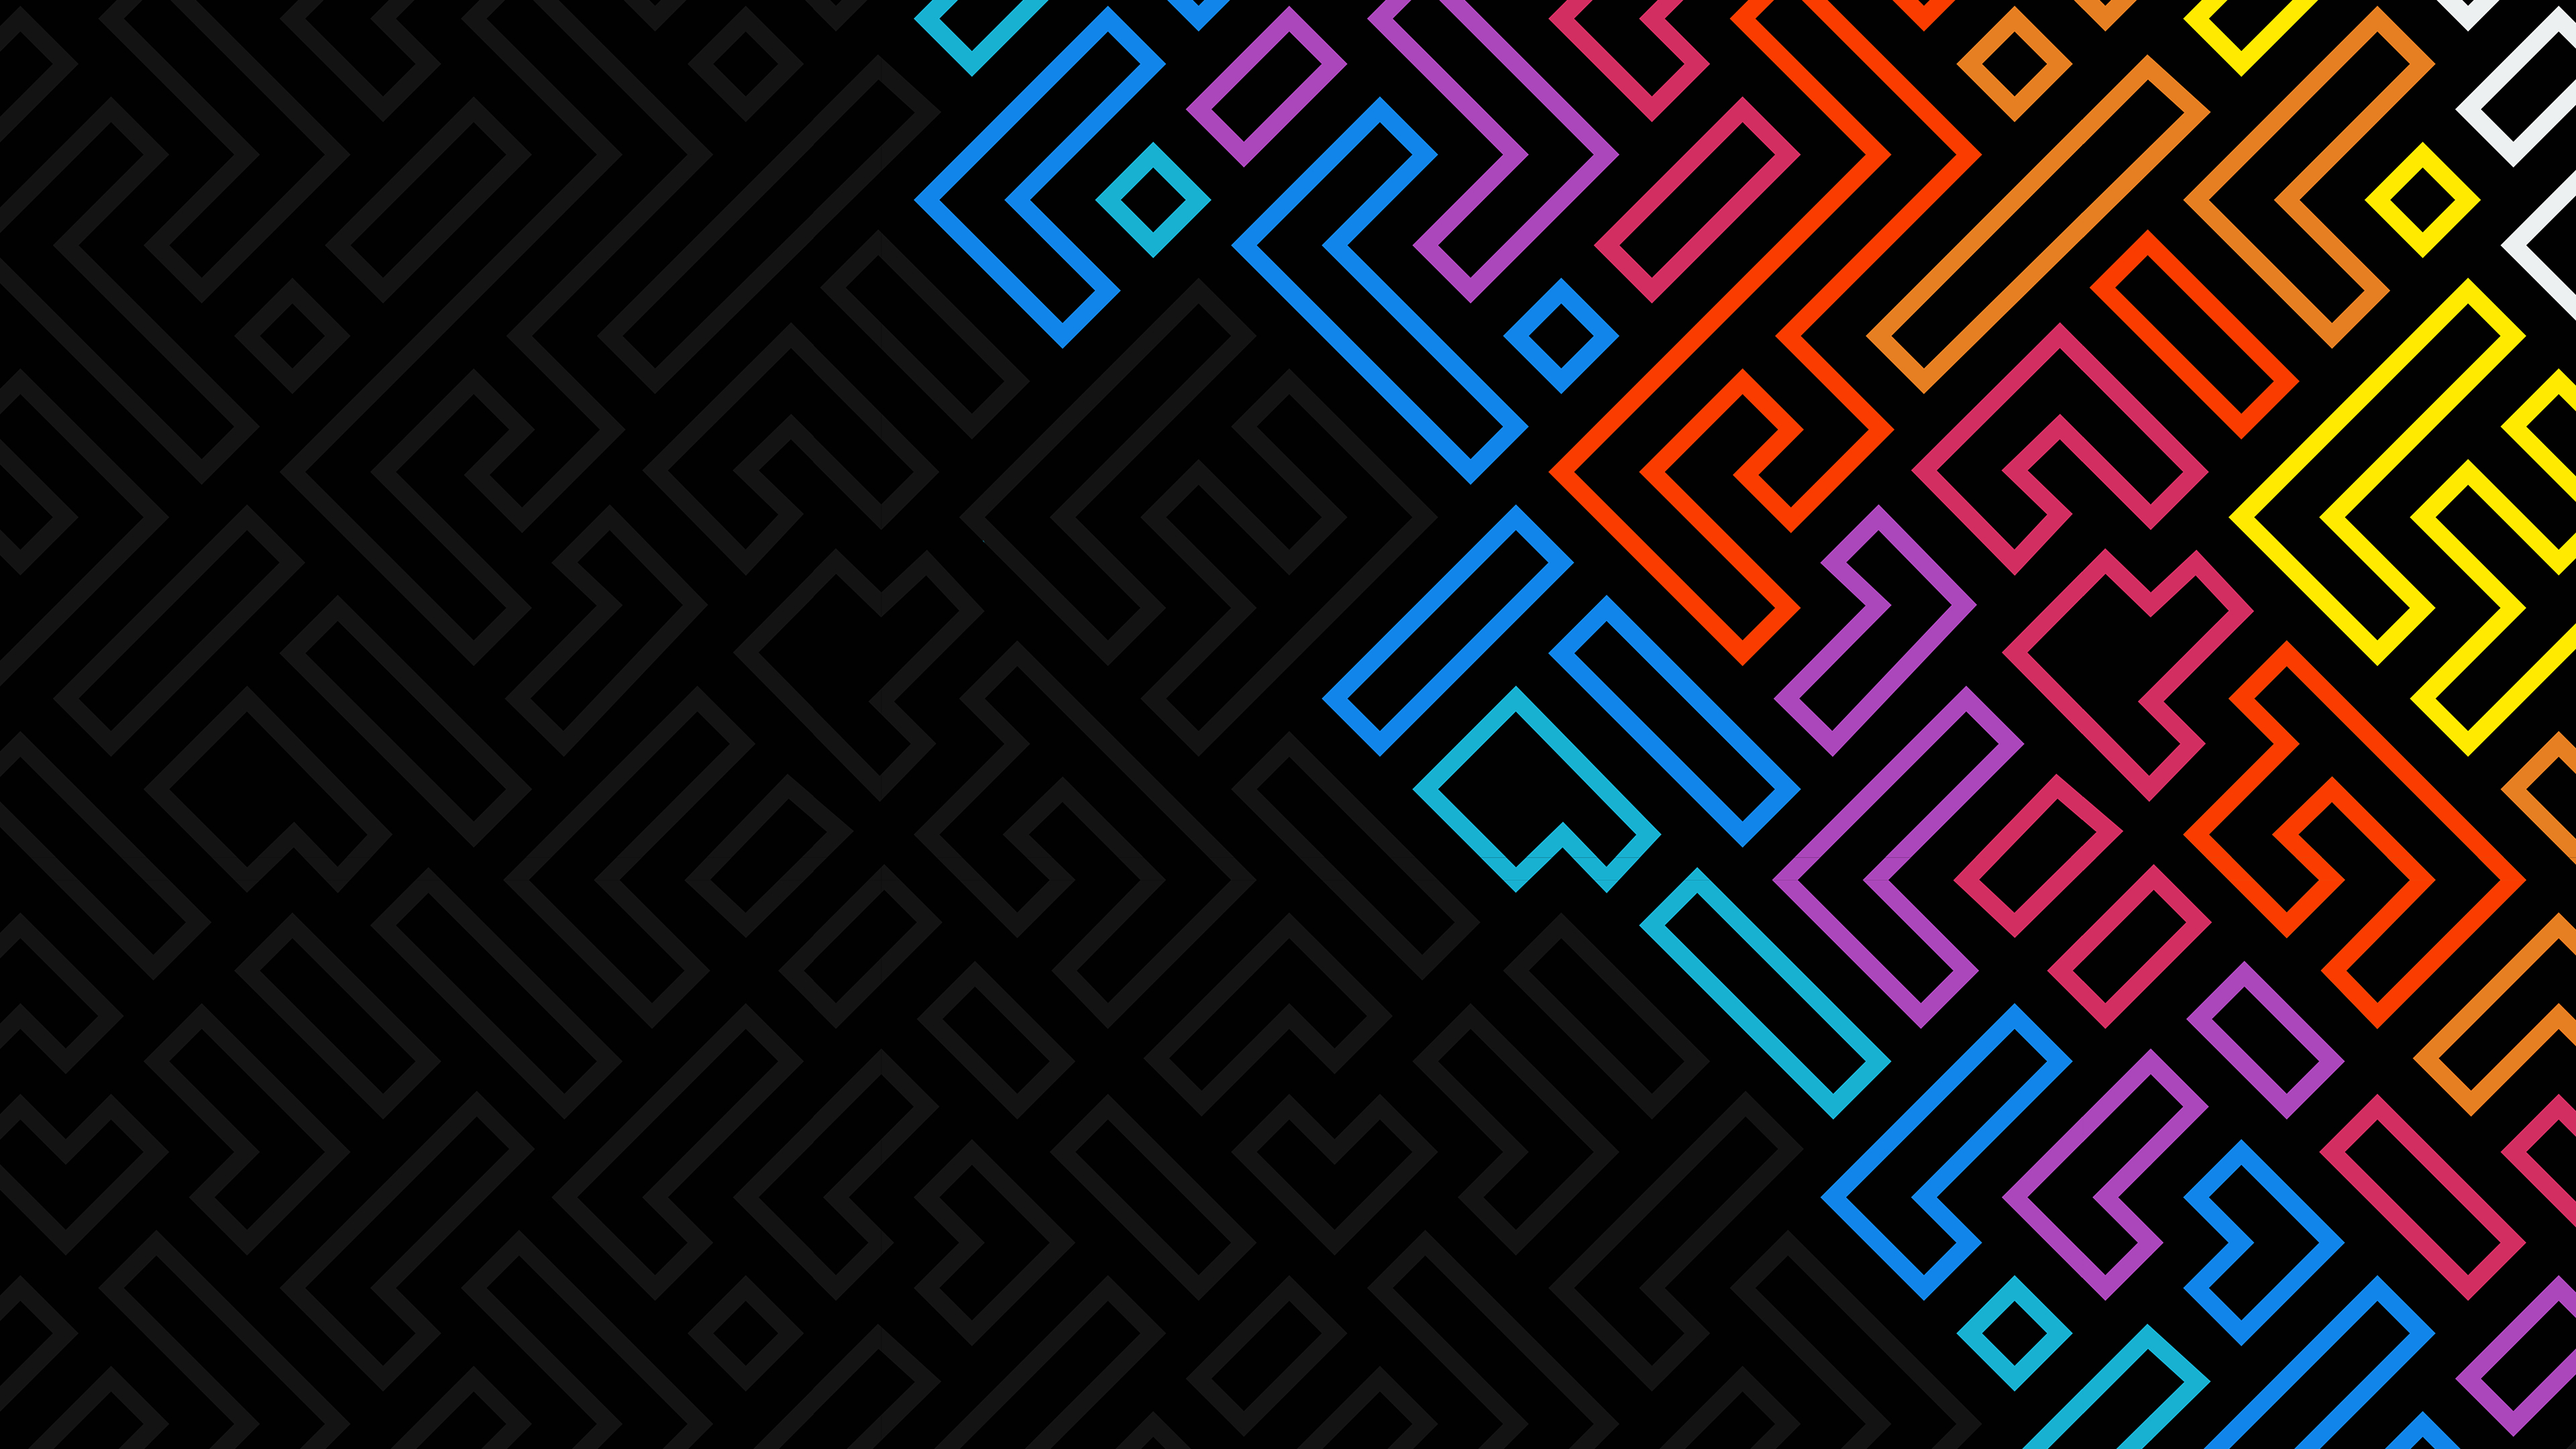 Cool 4K Pattern Wallpaper, HD Abstract